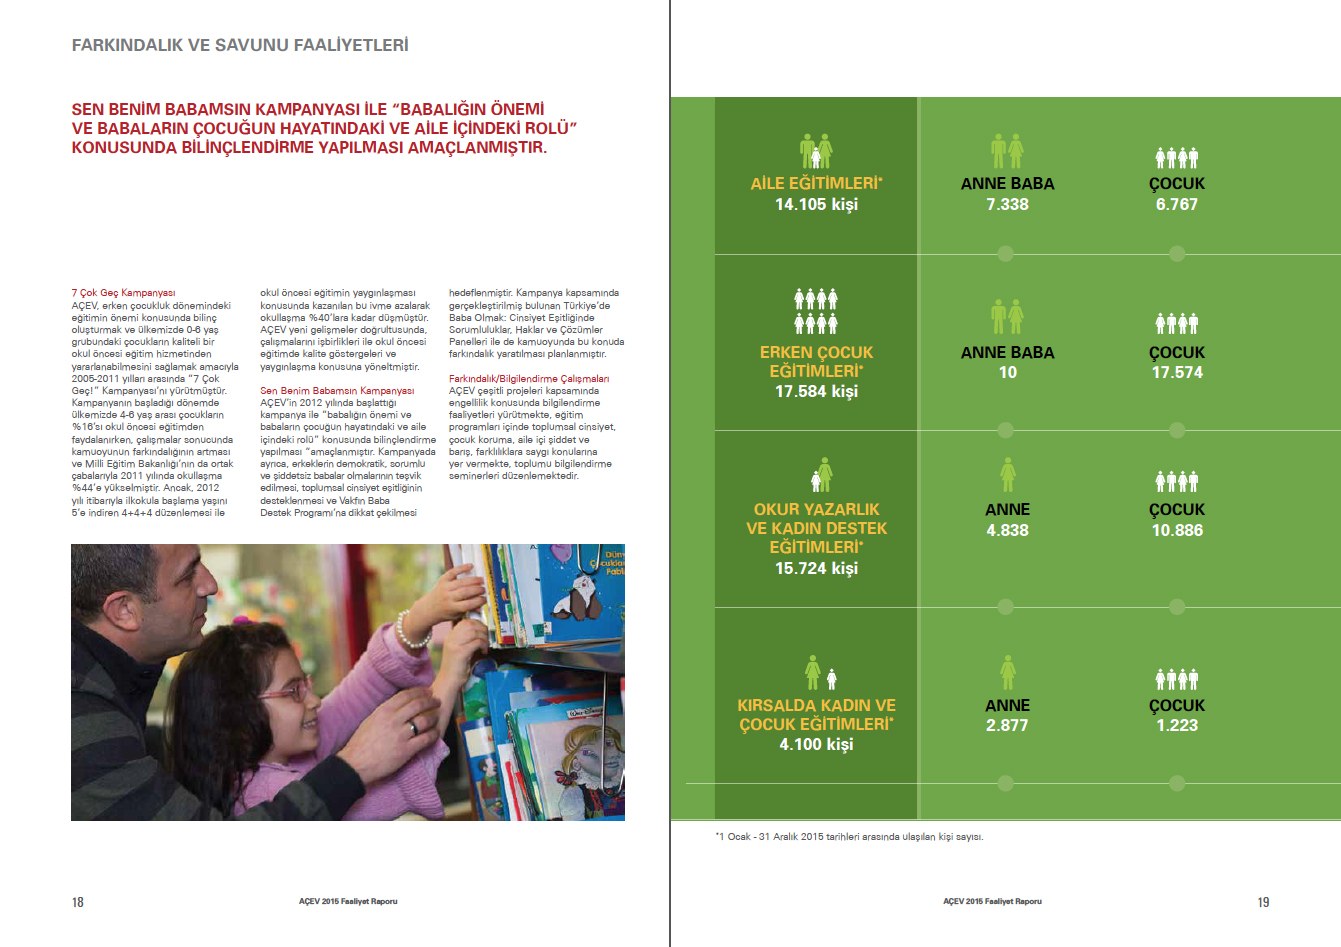 AÇEV / 2015 Faaliyet Raporu / 2015 Annual Report